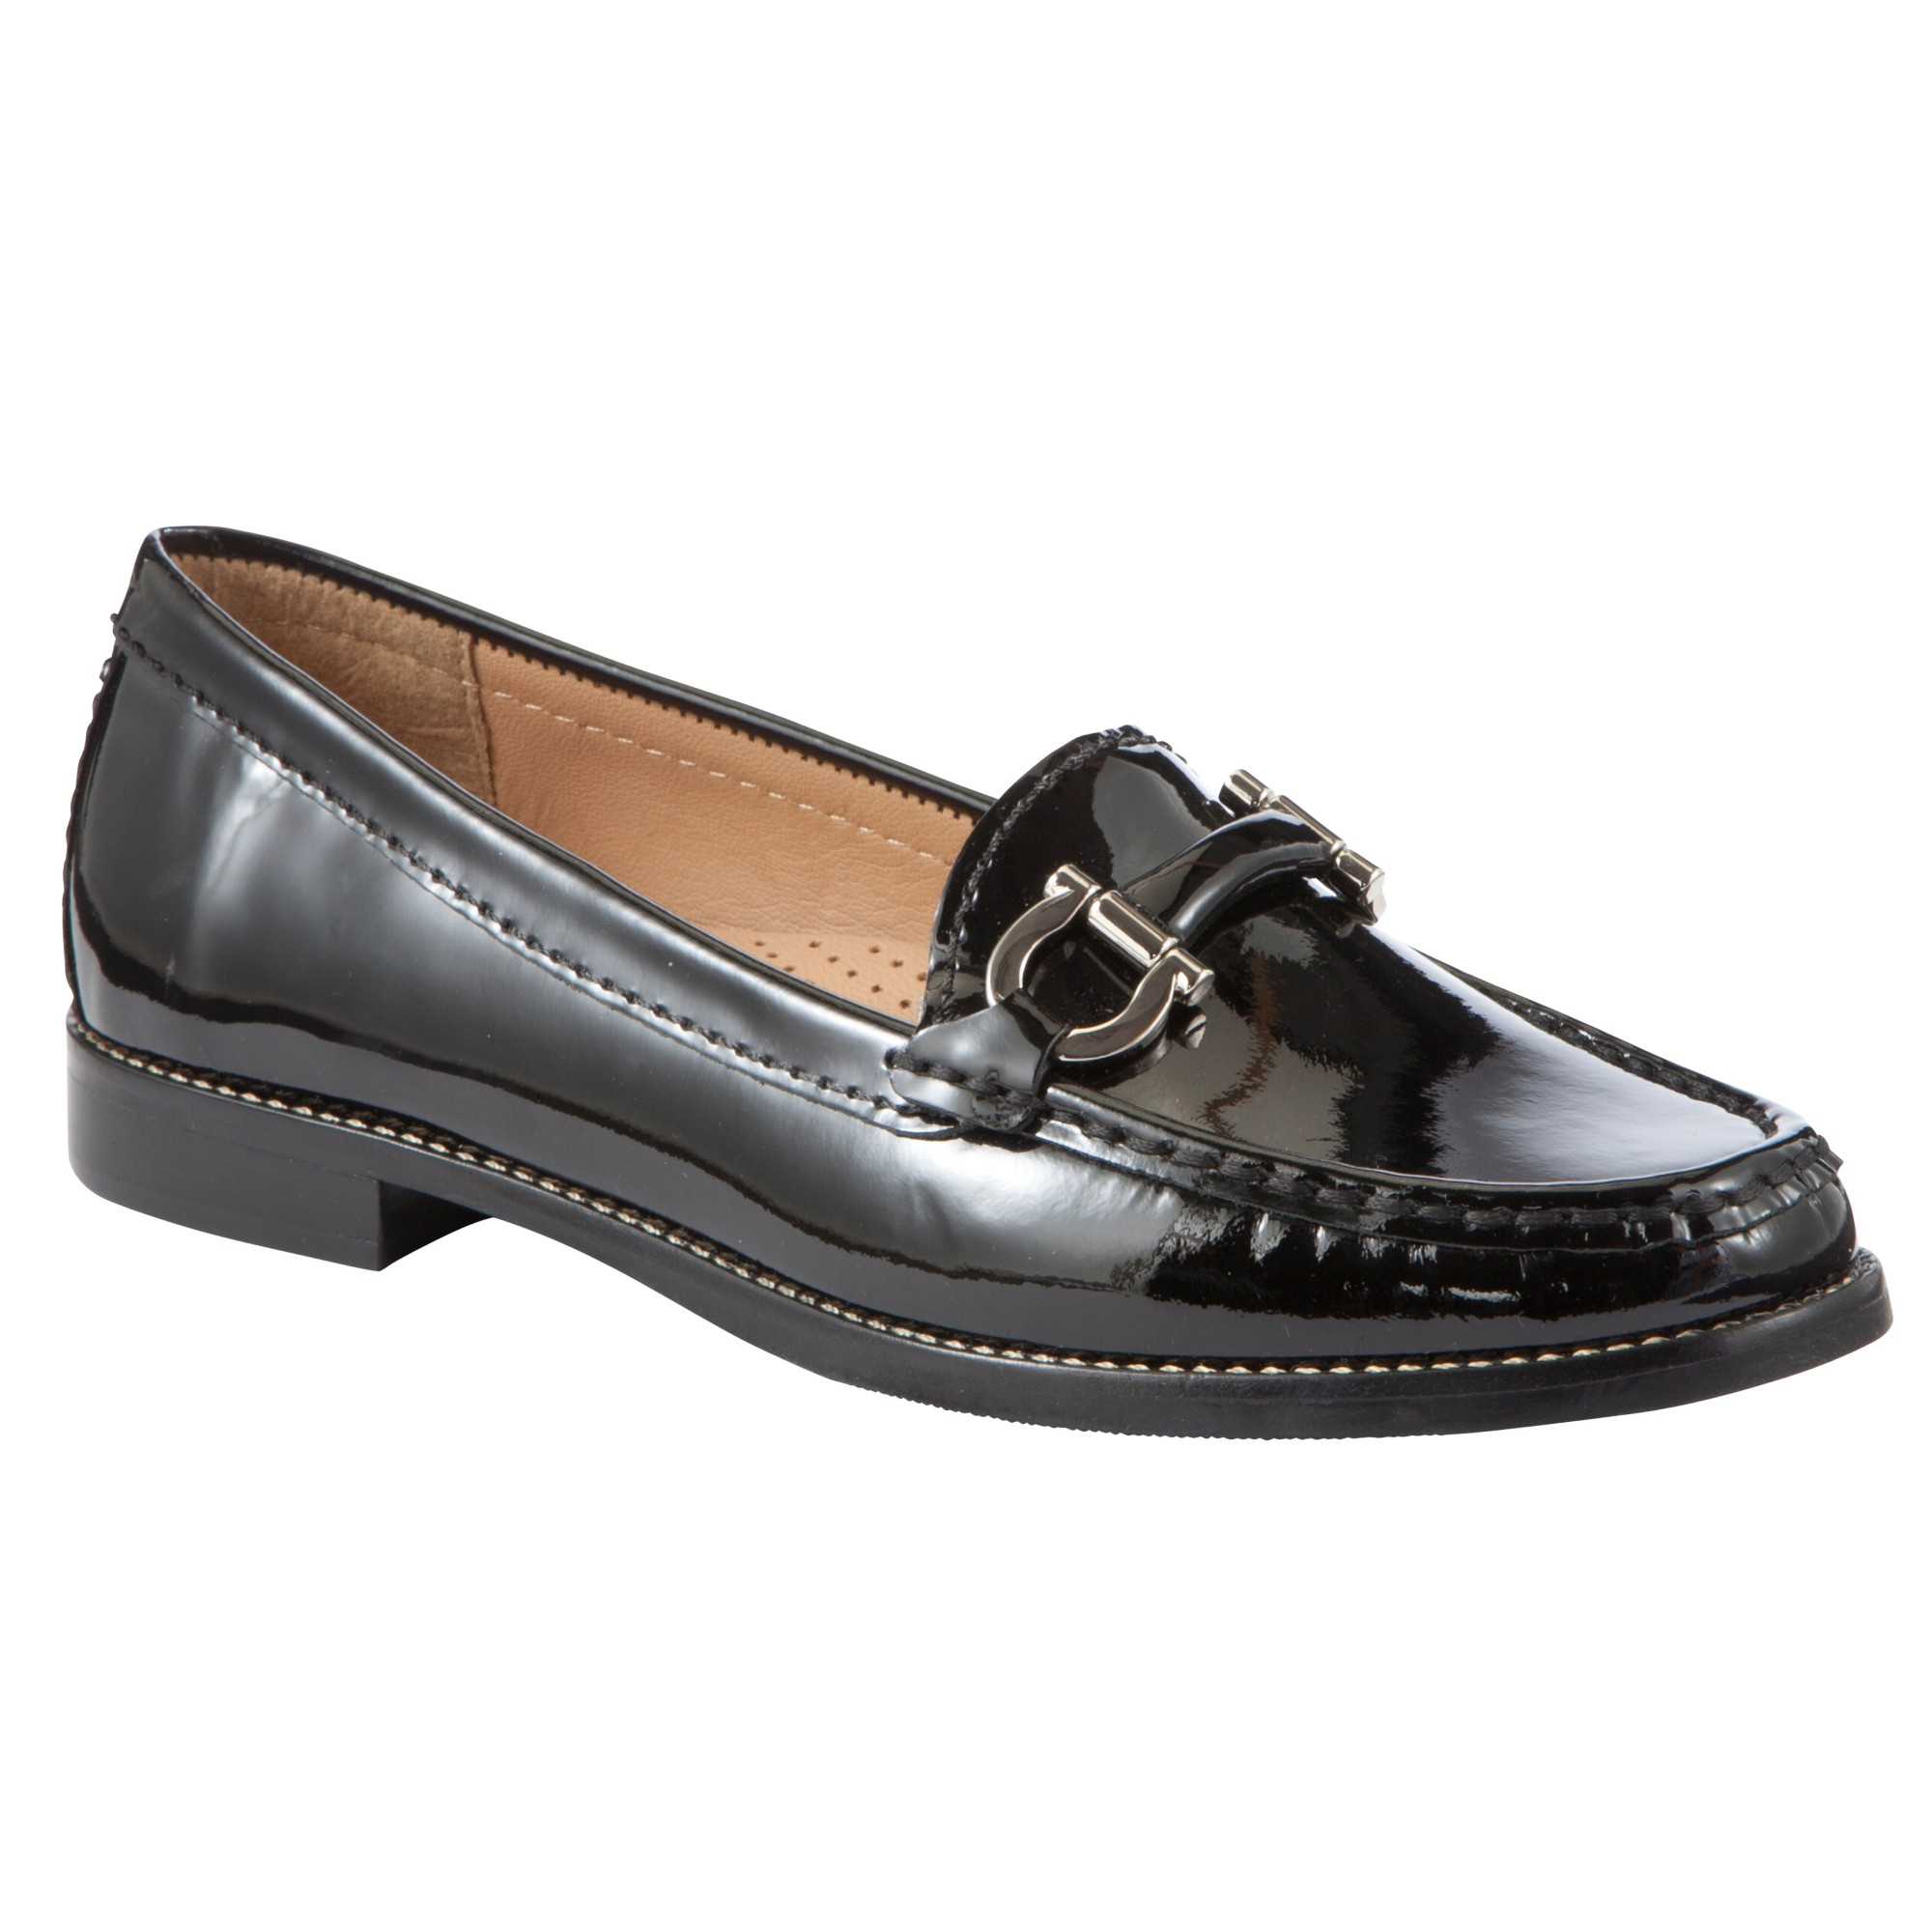 John Lewis Essen Patent Leather Horsebit Moccasin Loafers in Black | Lyst